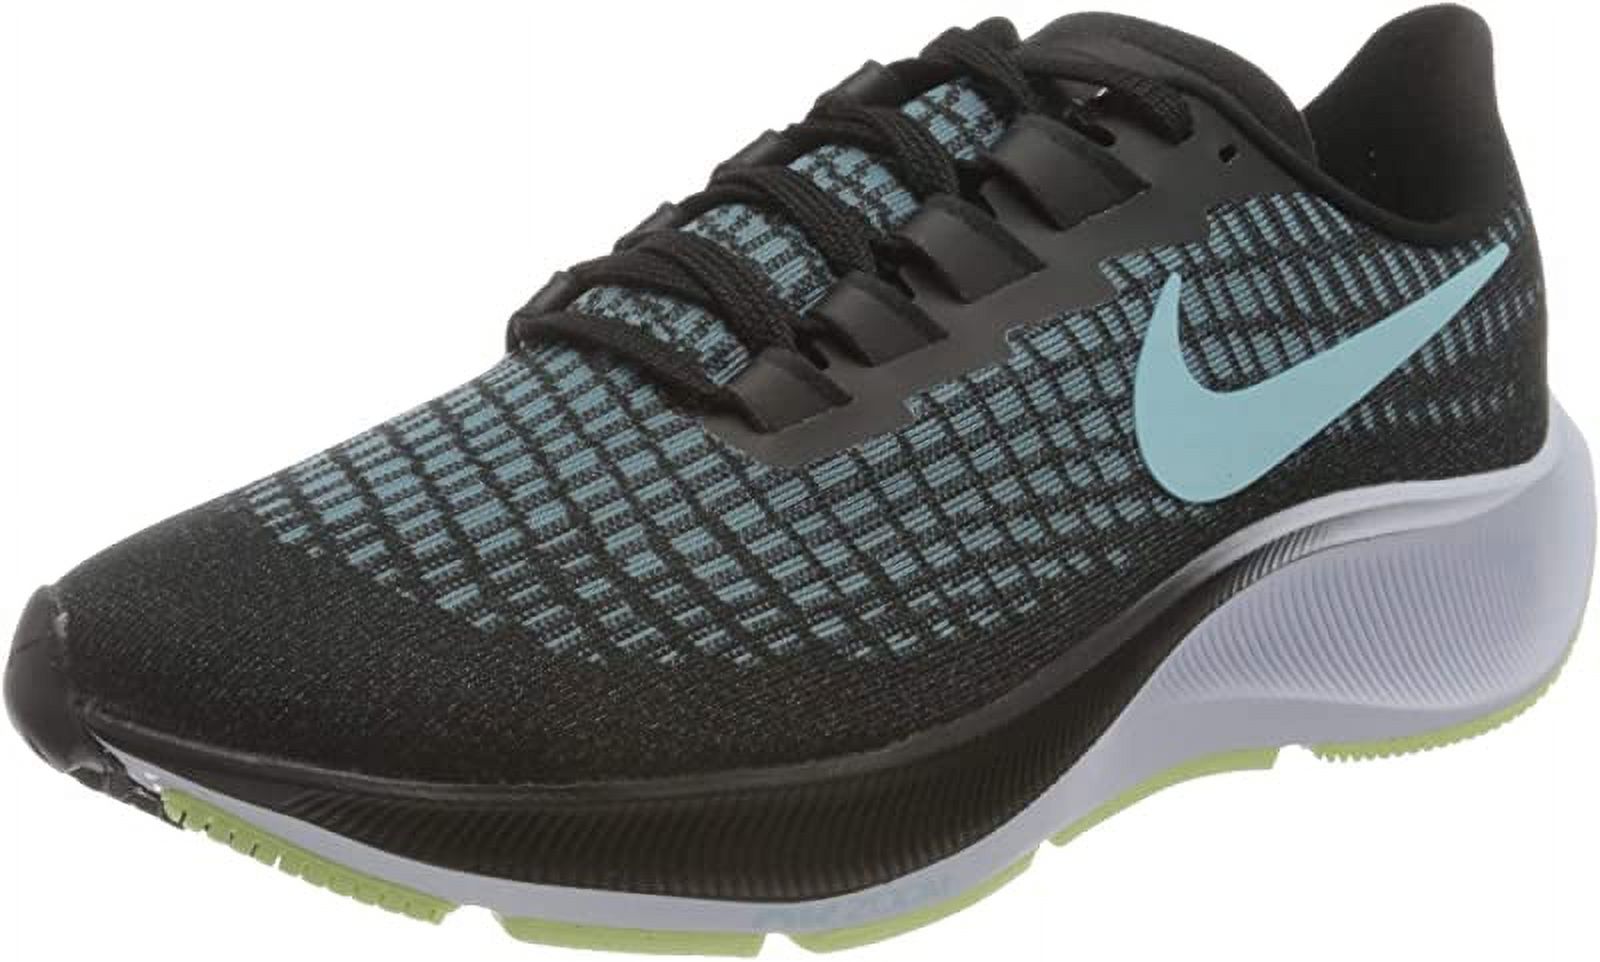 Nike Women's Air Zoom Pegasus 37 Running Shoes, Glacier Ice/Volt, 7.5 B(M) US - image 1 of 4